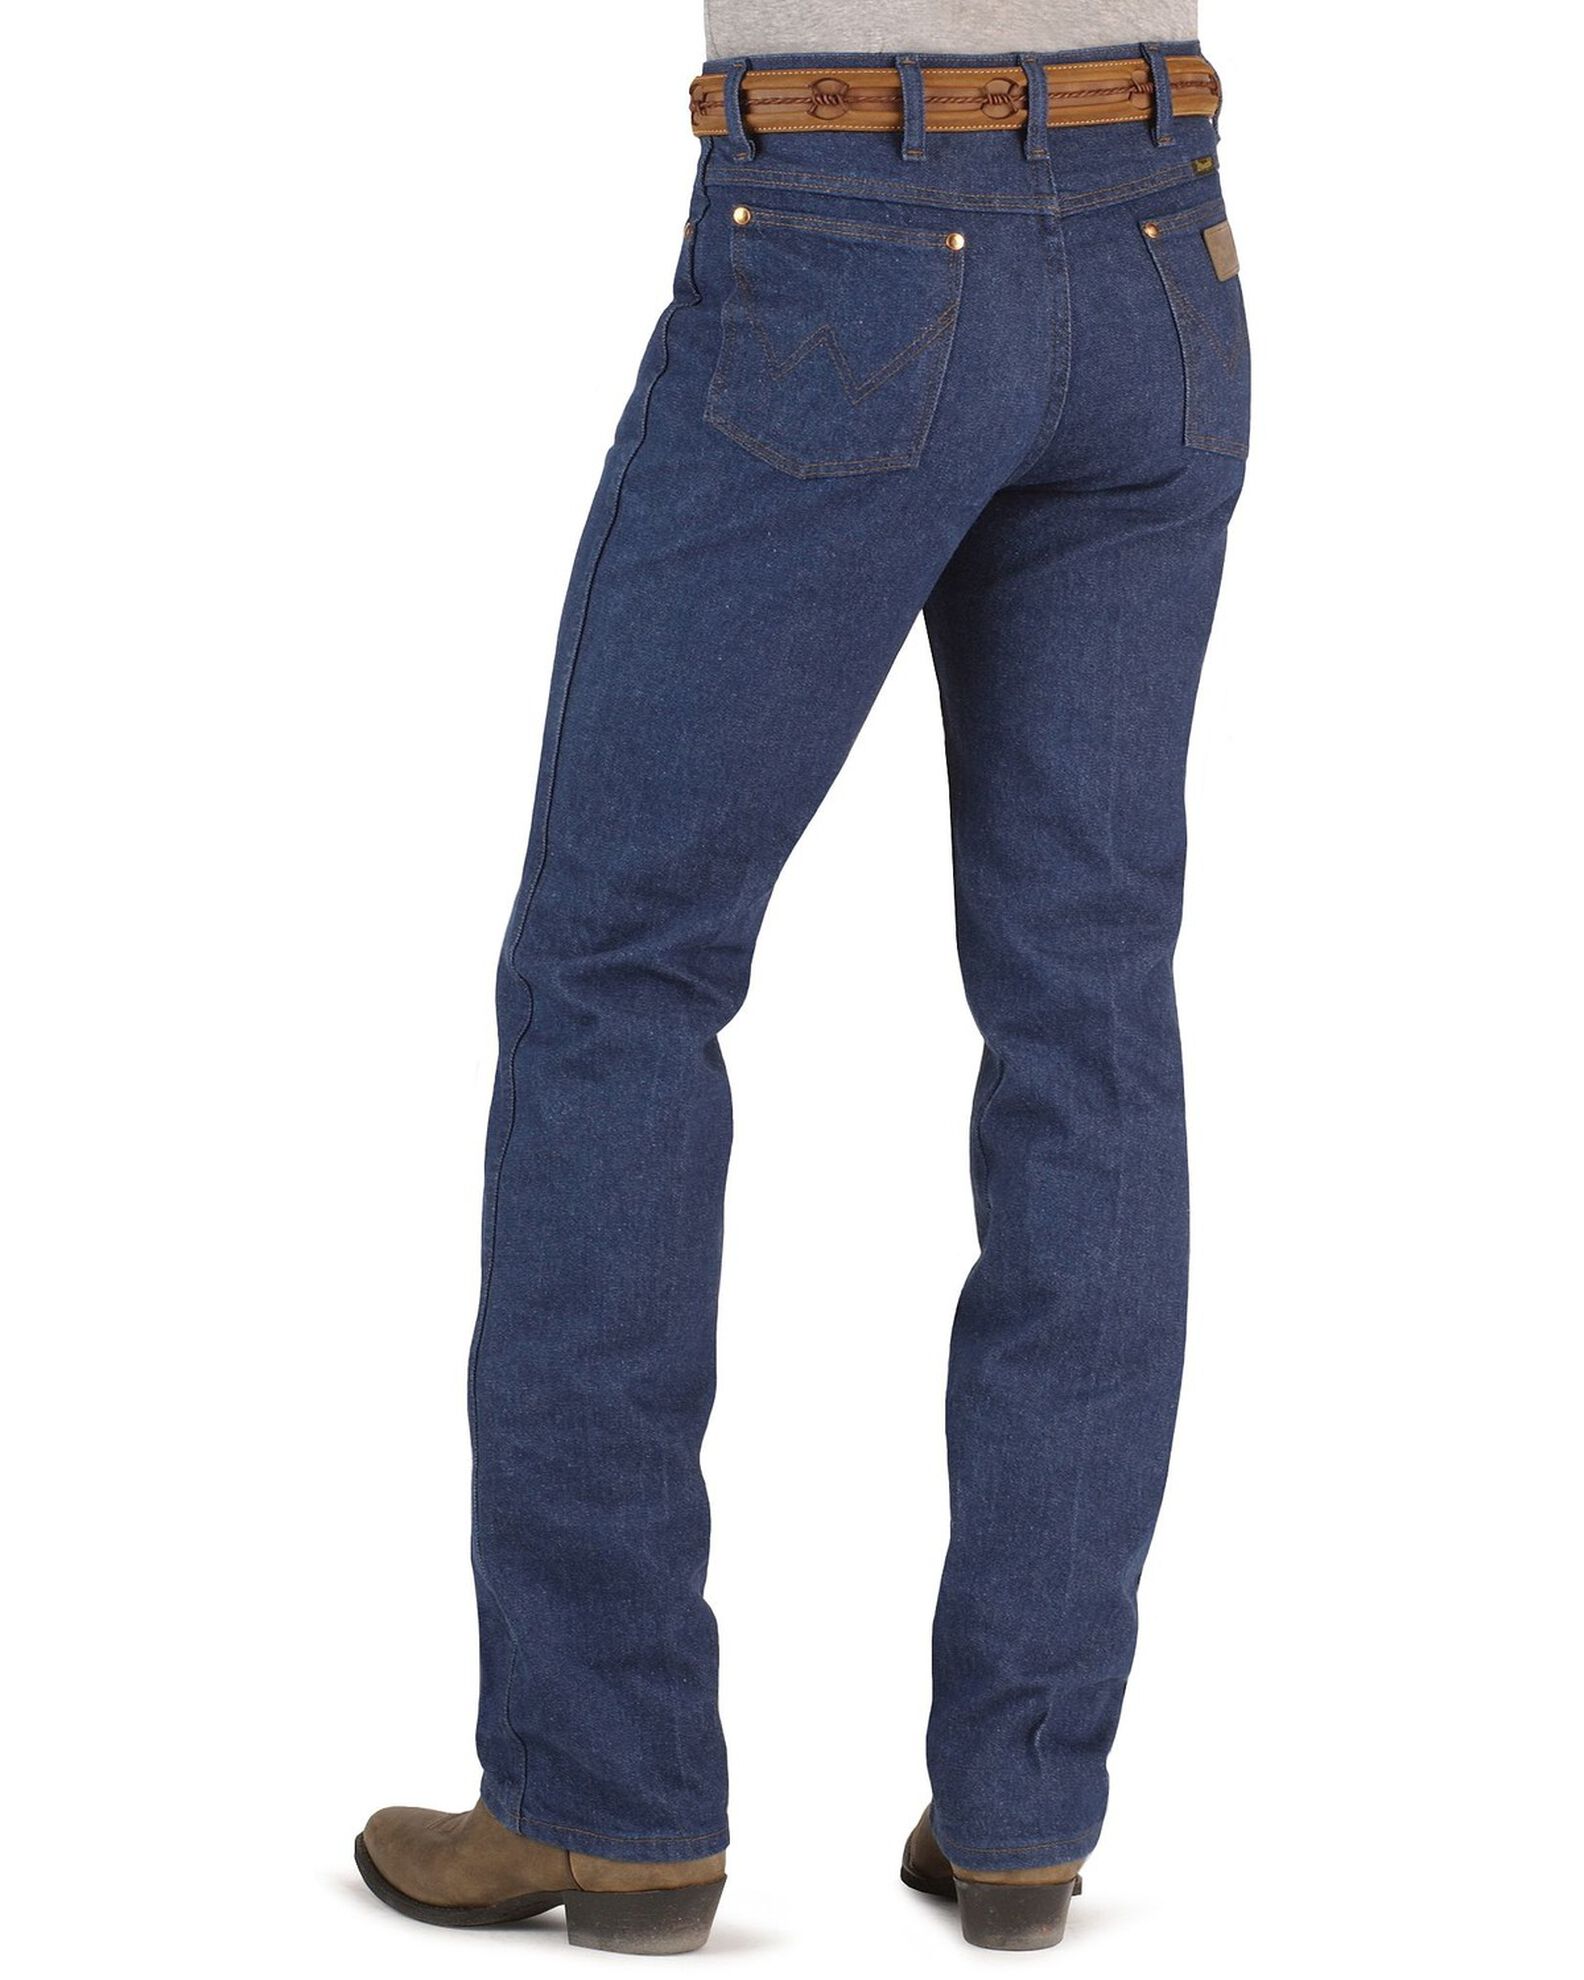 Wrangler Jeans - Jeans Fit 936 Sheplers - Denim Tall Slim Prewashed 